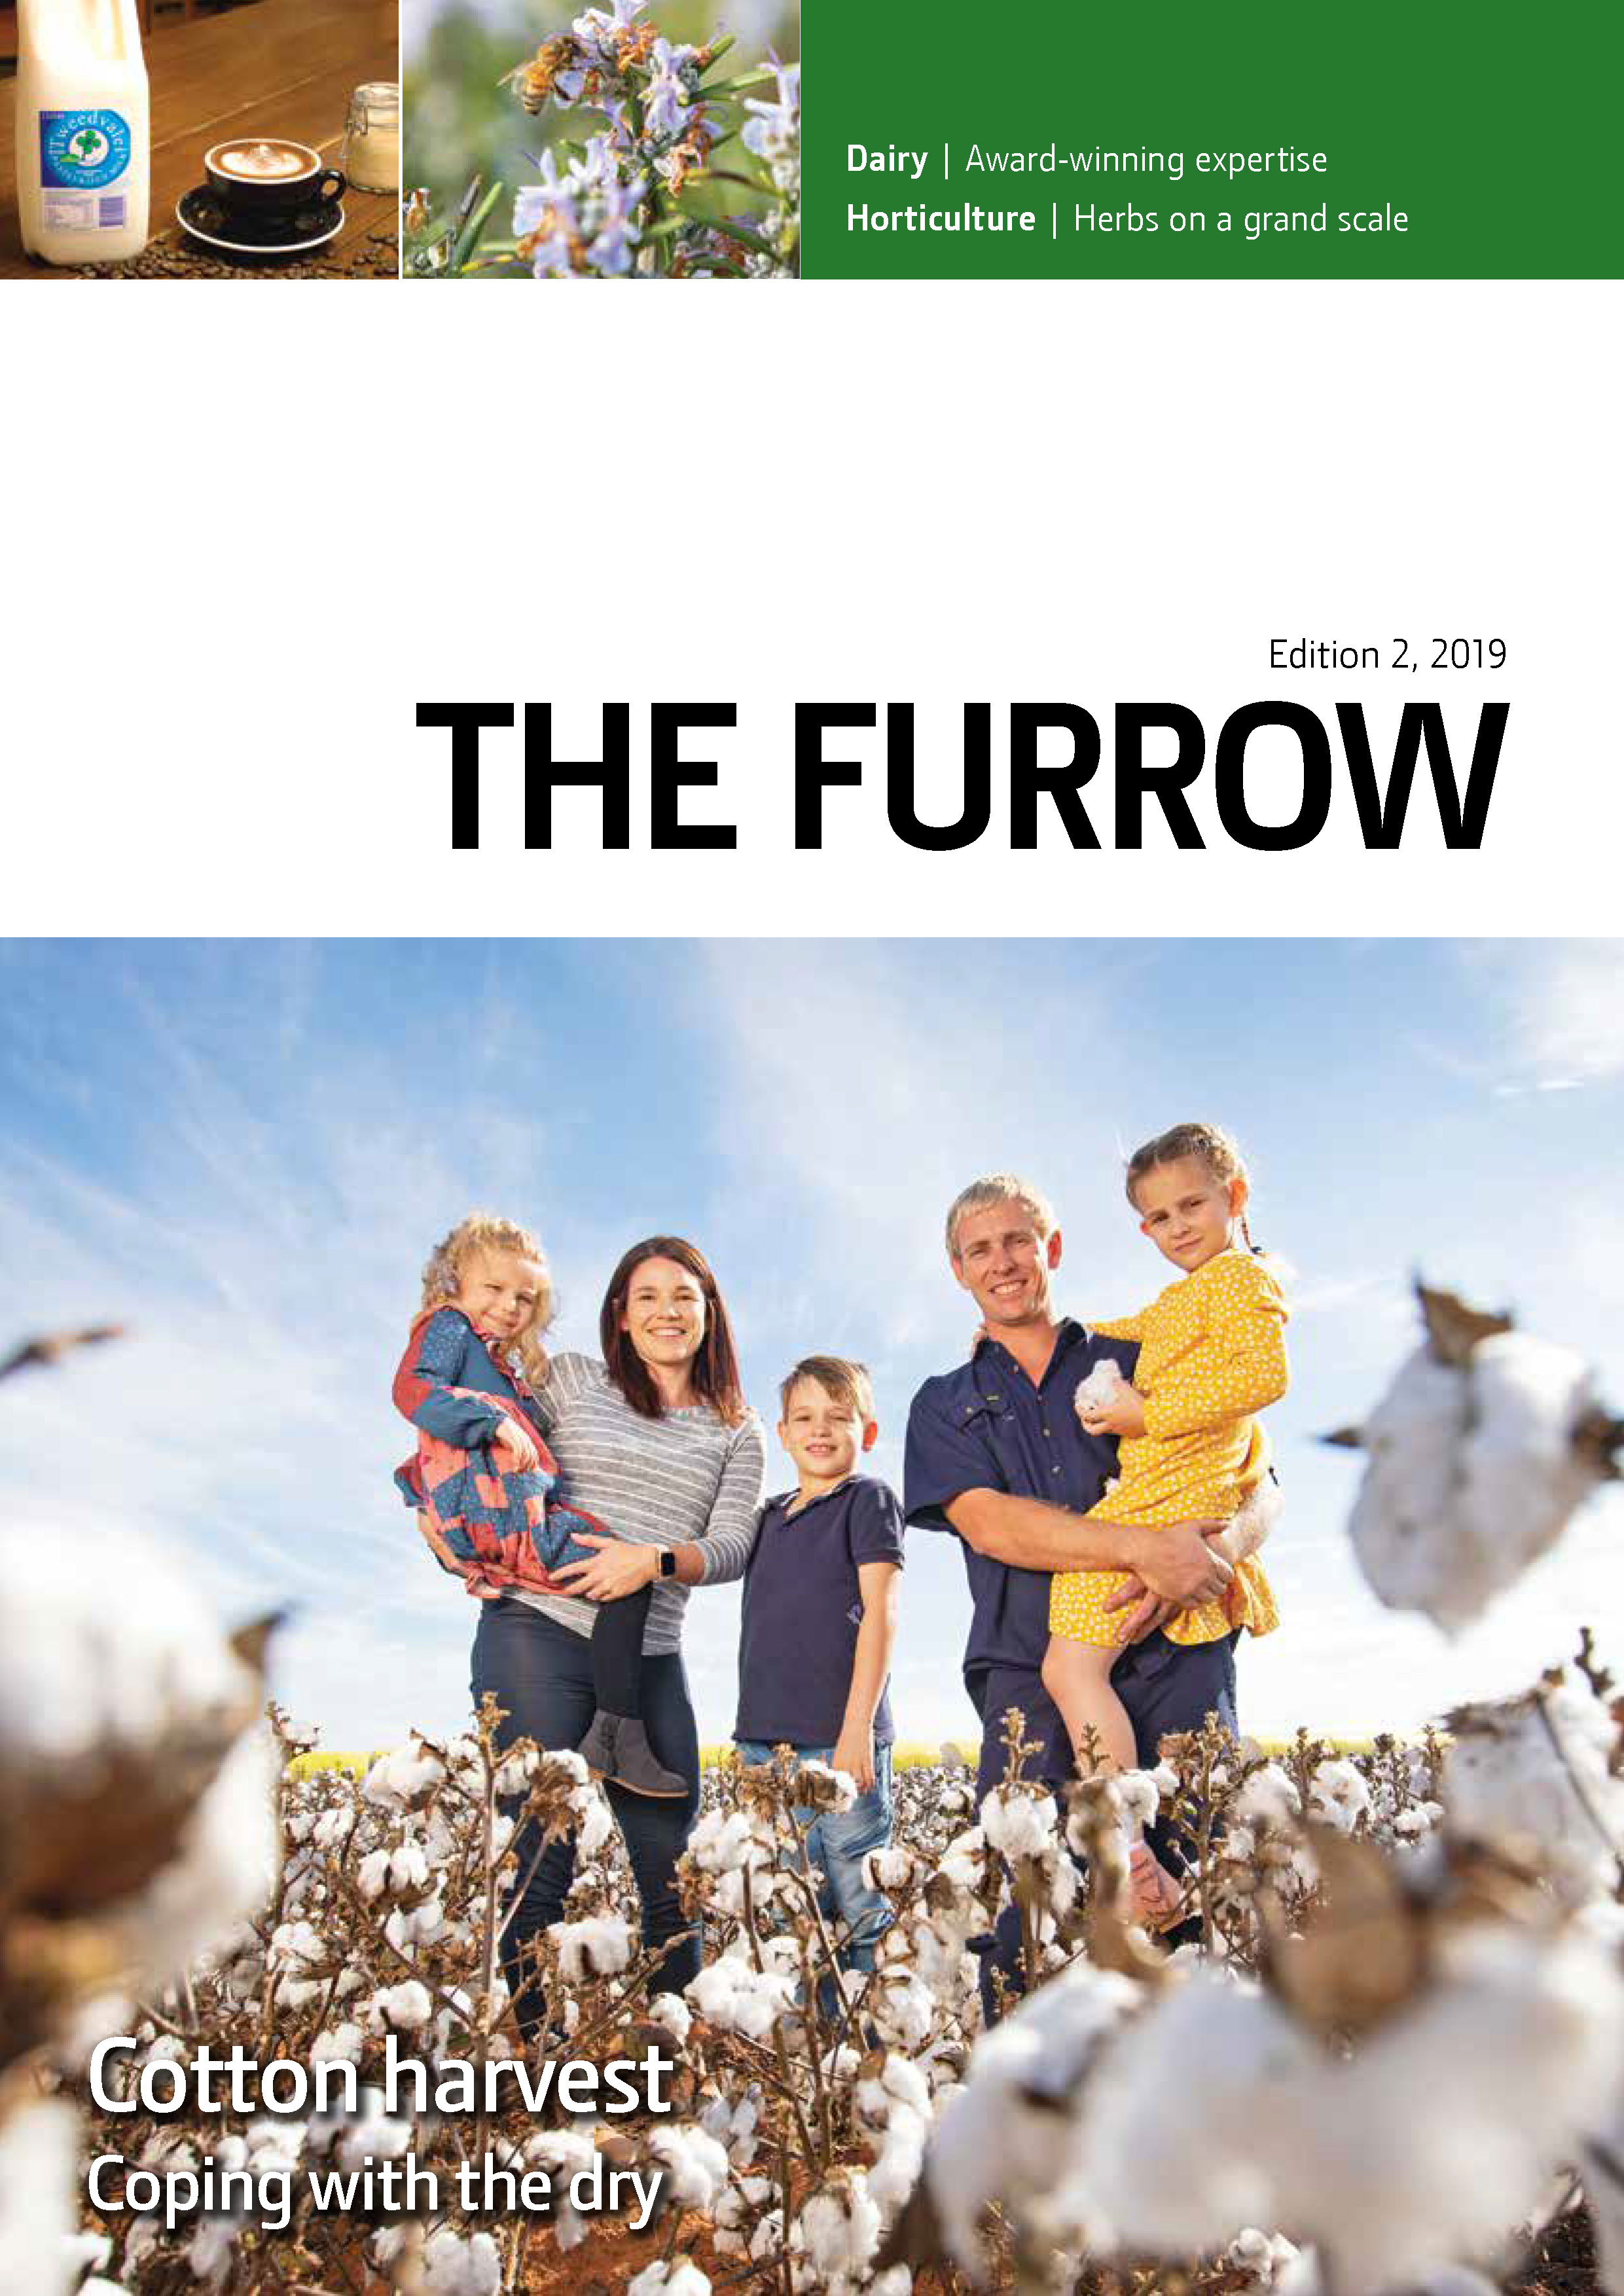 The Furrow - Edition 2, 2019